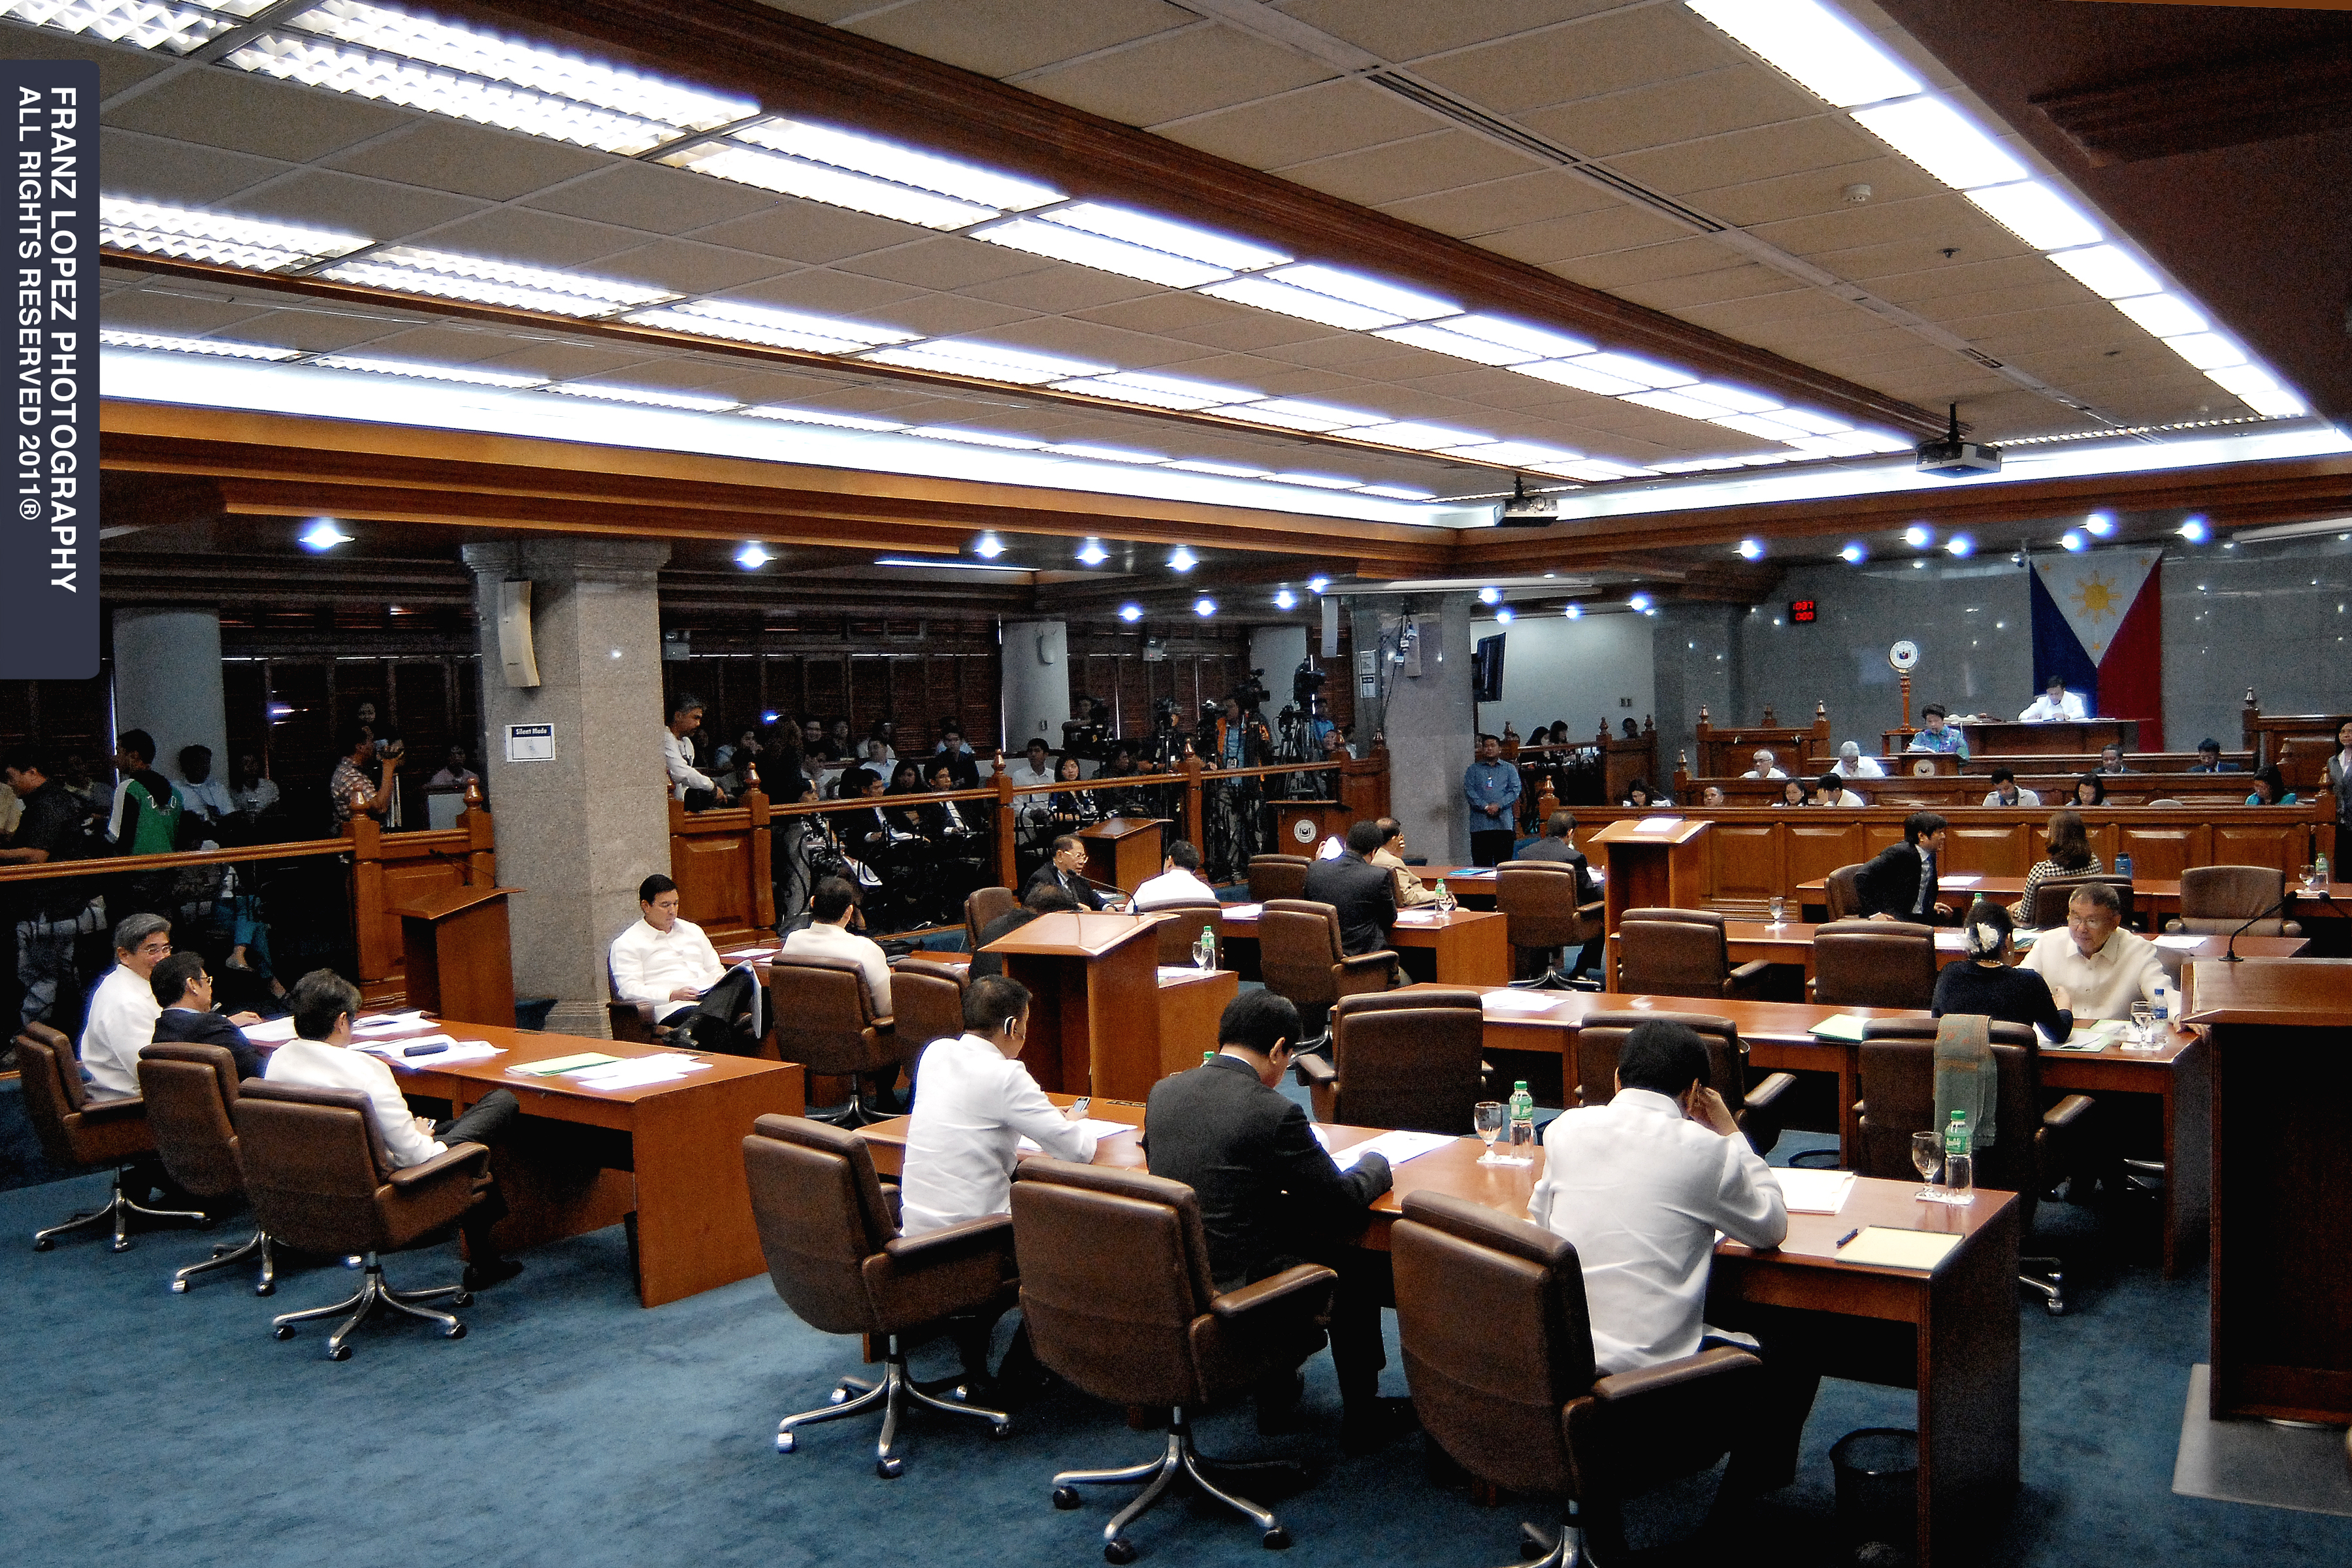 Senate of the Philippines (photo credit: Franz Lopez/flickr)